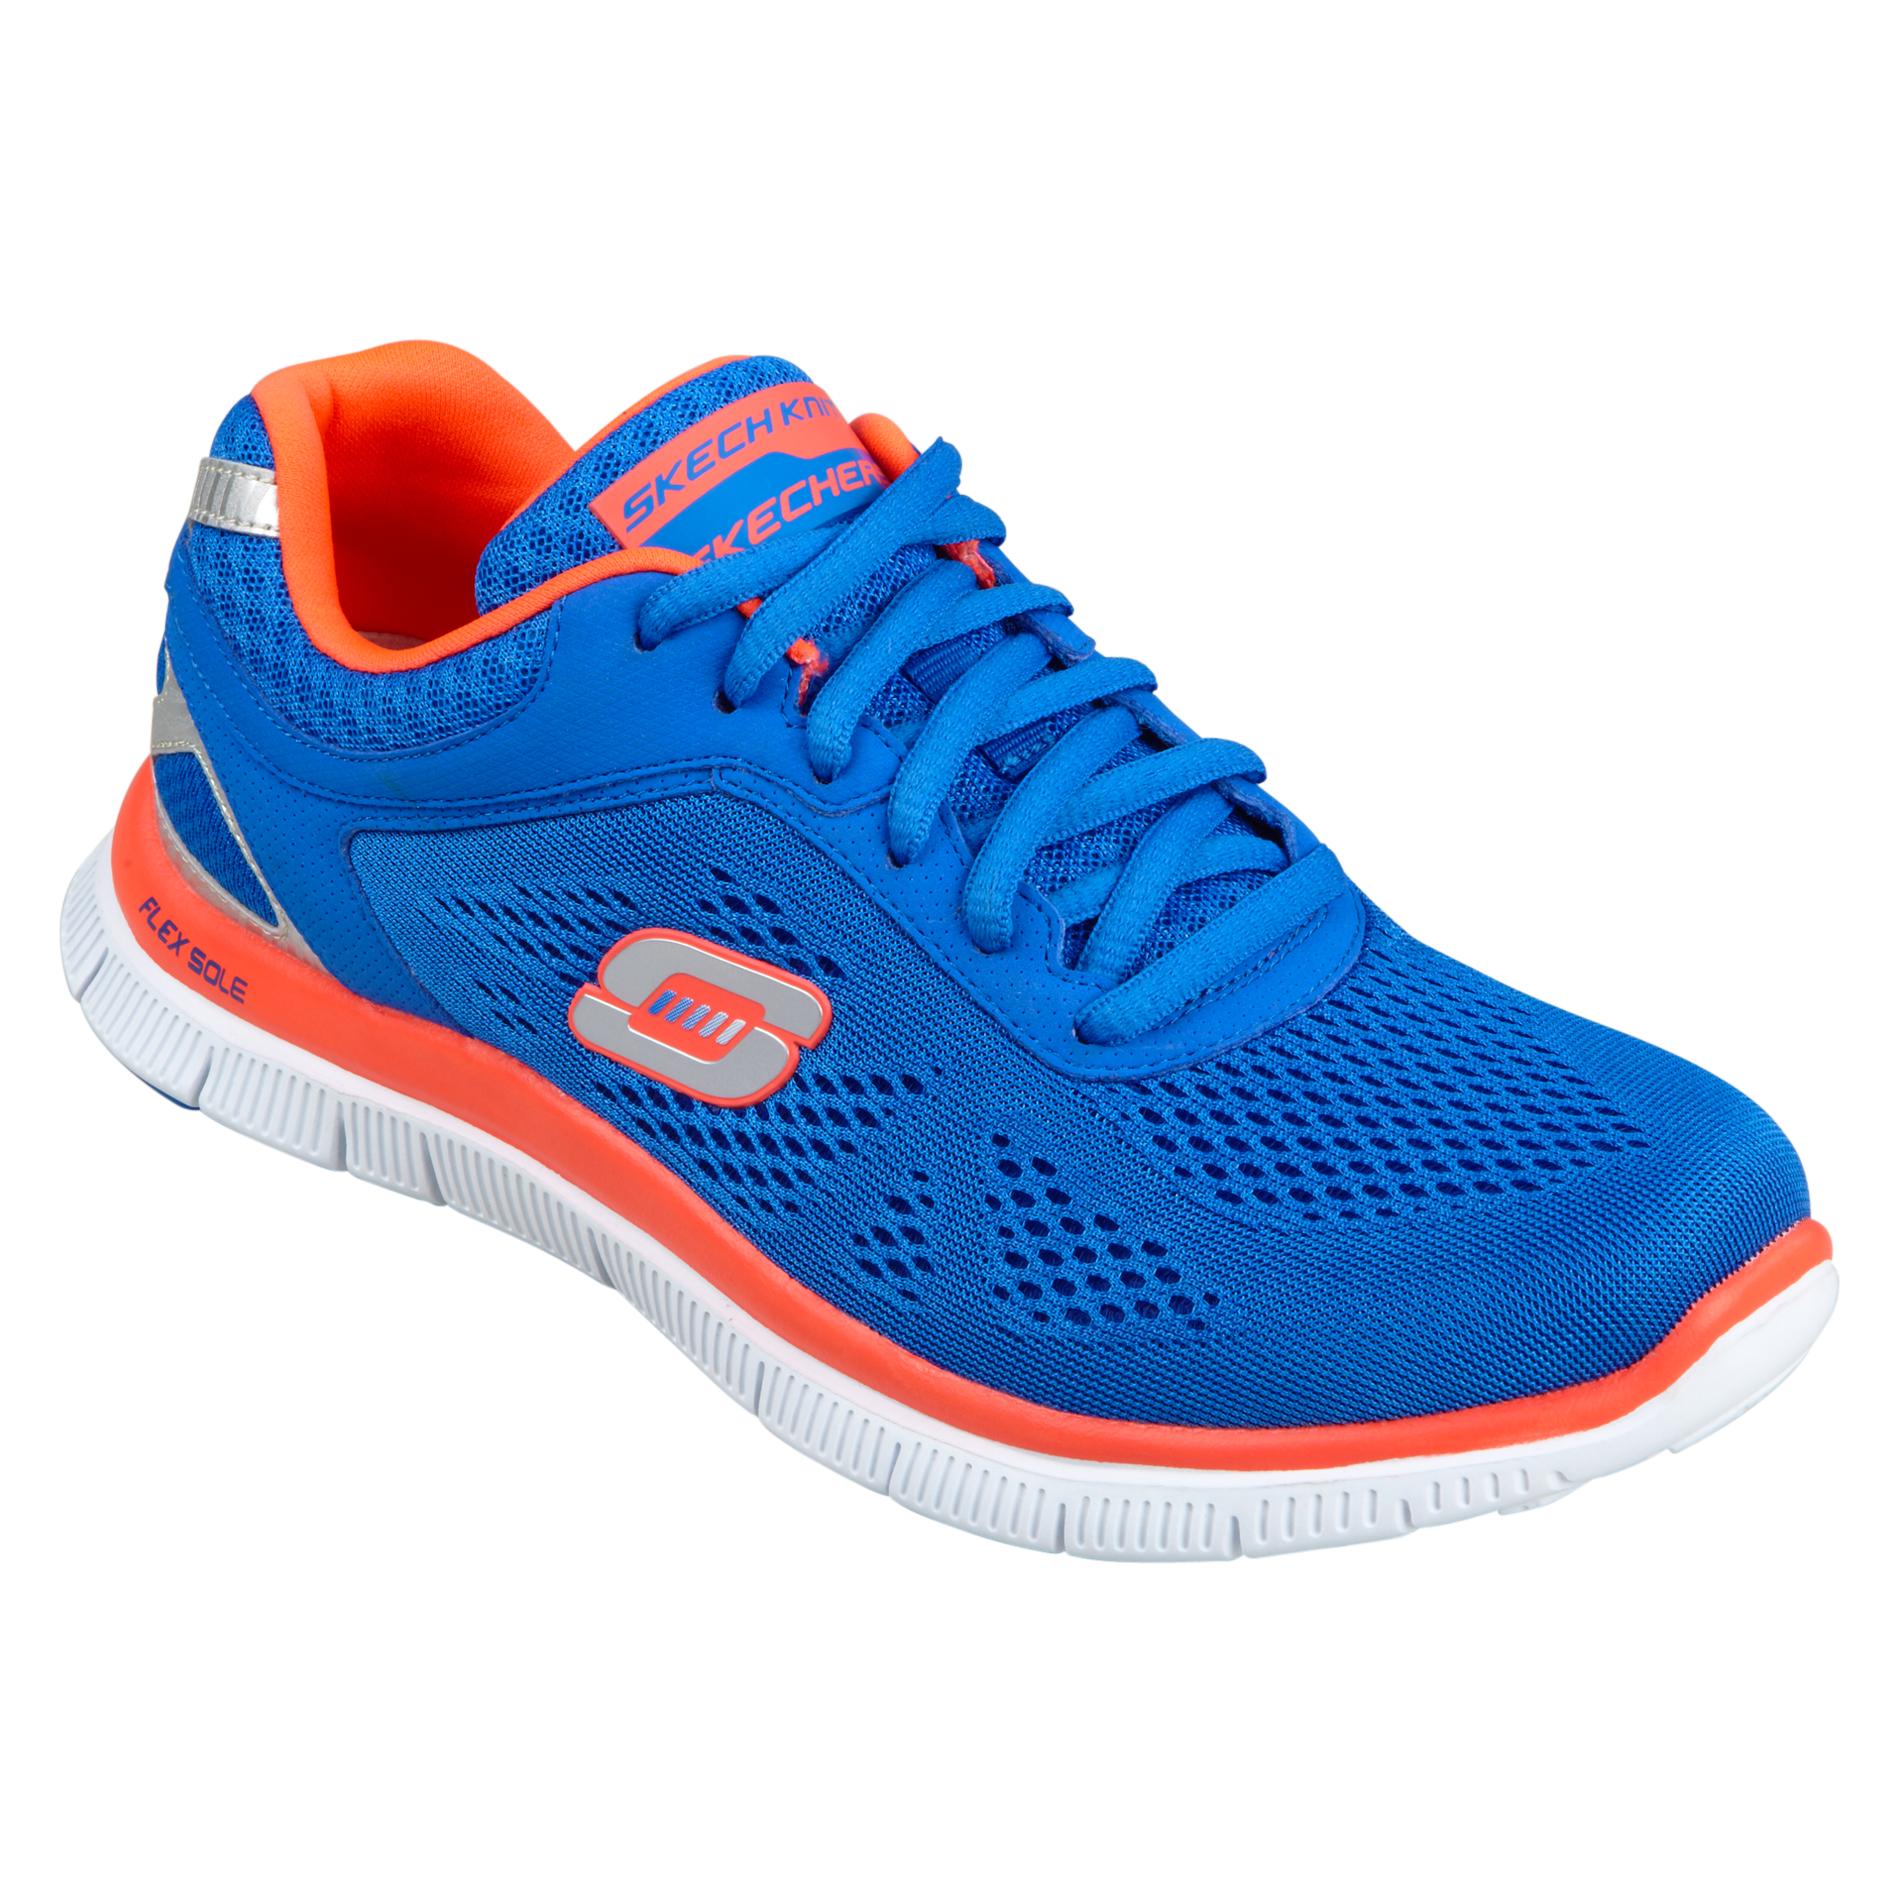 Skechers Women's Blue Coral Flex Appeal Love Your Style Athletic Shoe